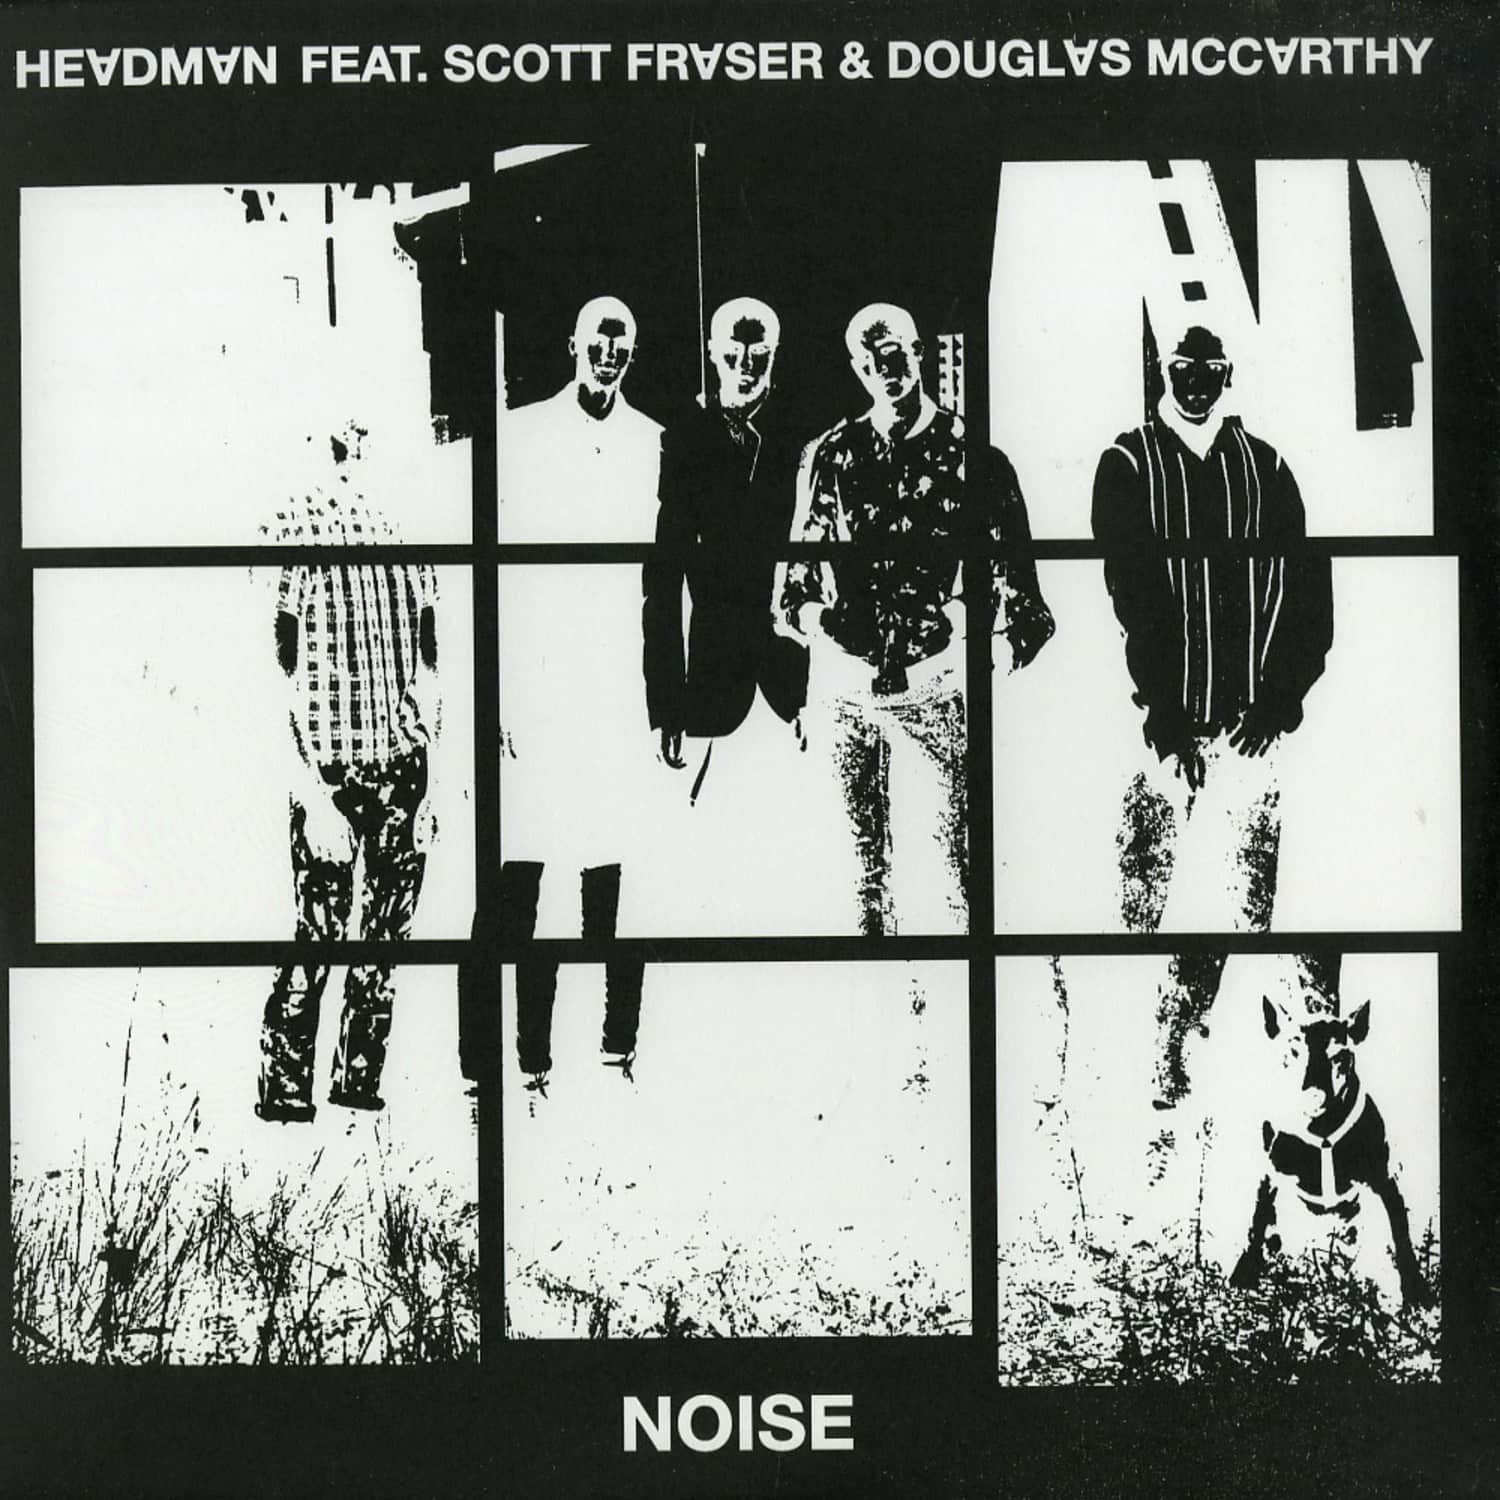 Headman feat Scott Fraser & Douglas McCarthy - NOISE